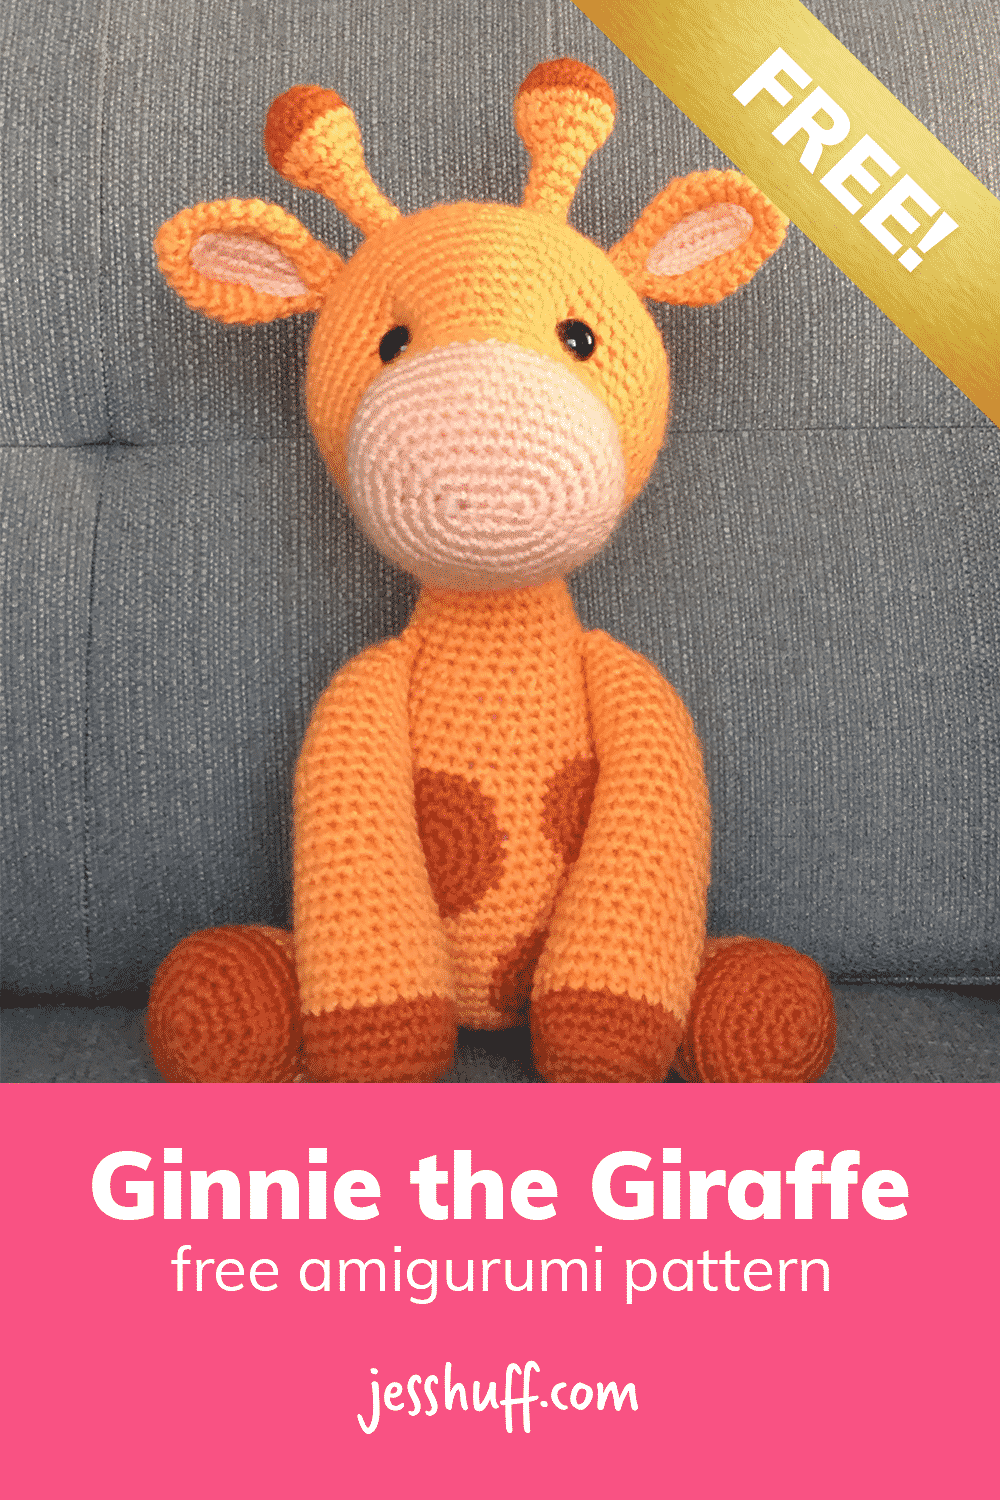 Giraffe amigurumi pattern – how cute is this?? I can't believe it's free! via @heyjesshuff